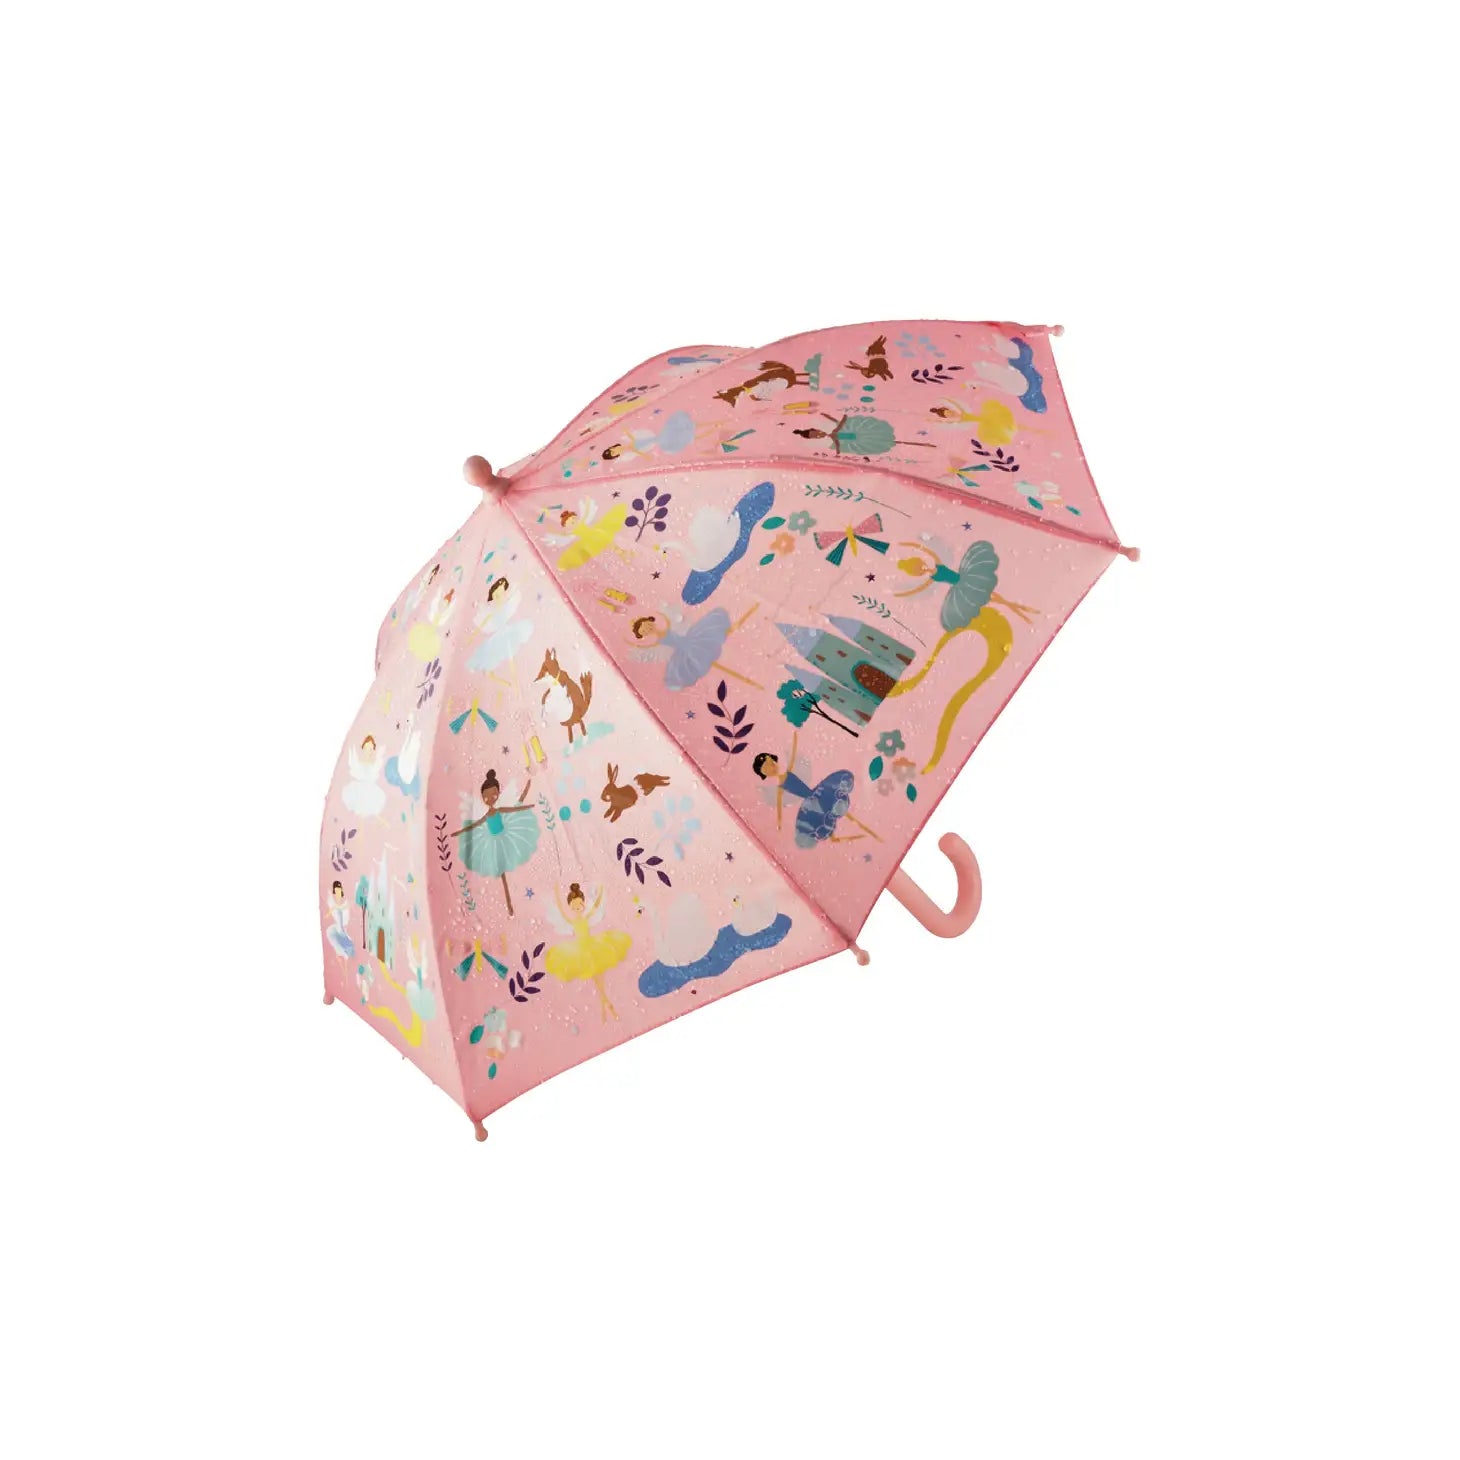 Enchanted Pink Umbrella